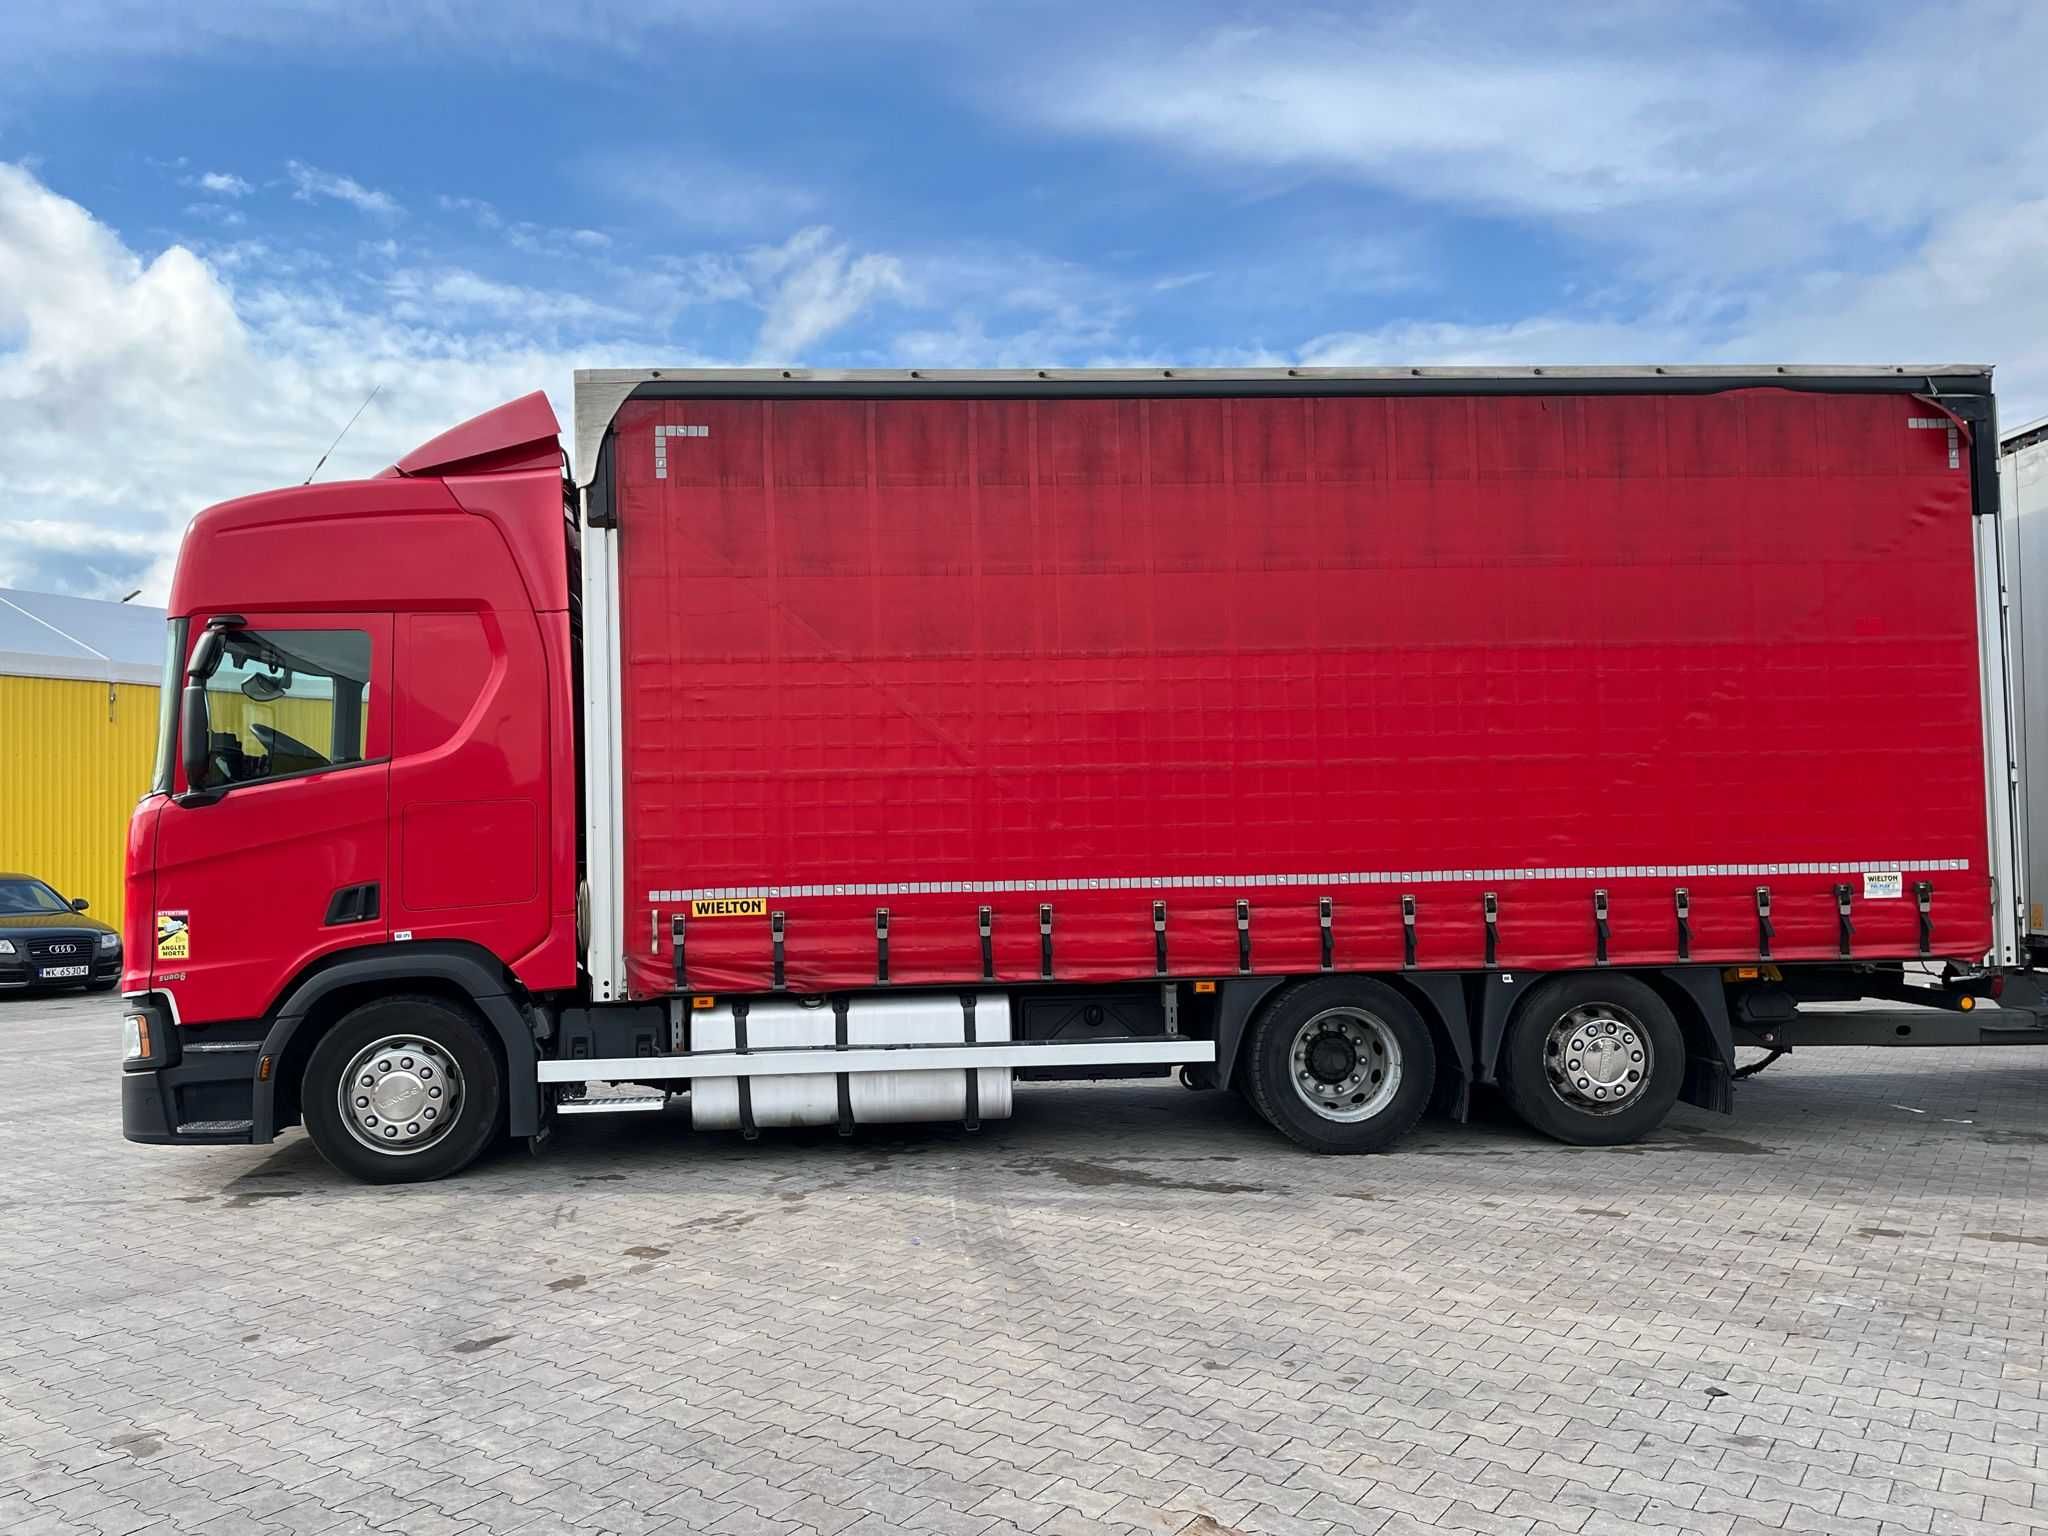 Scania r450 Zestaw/Tandem 2018/2019 7szt